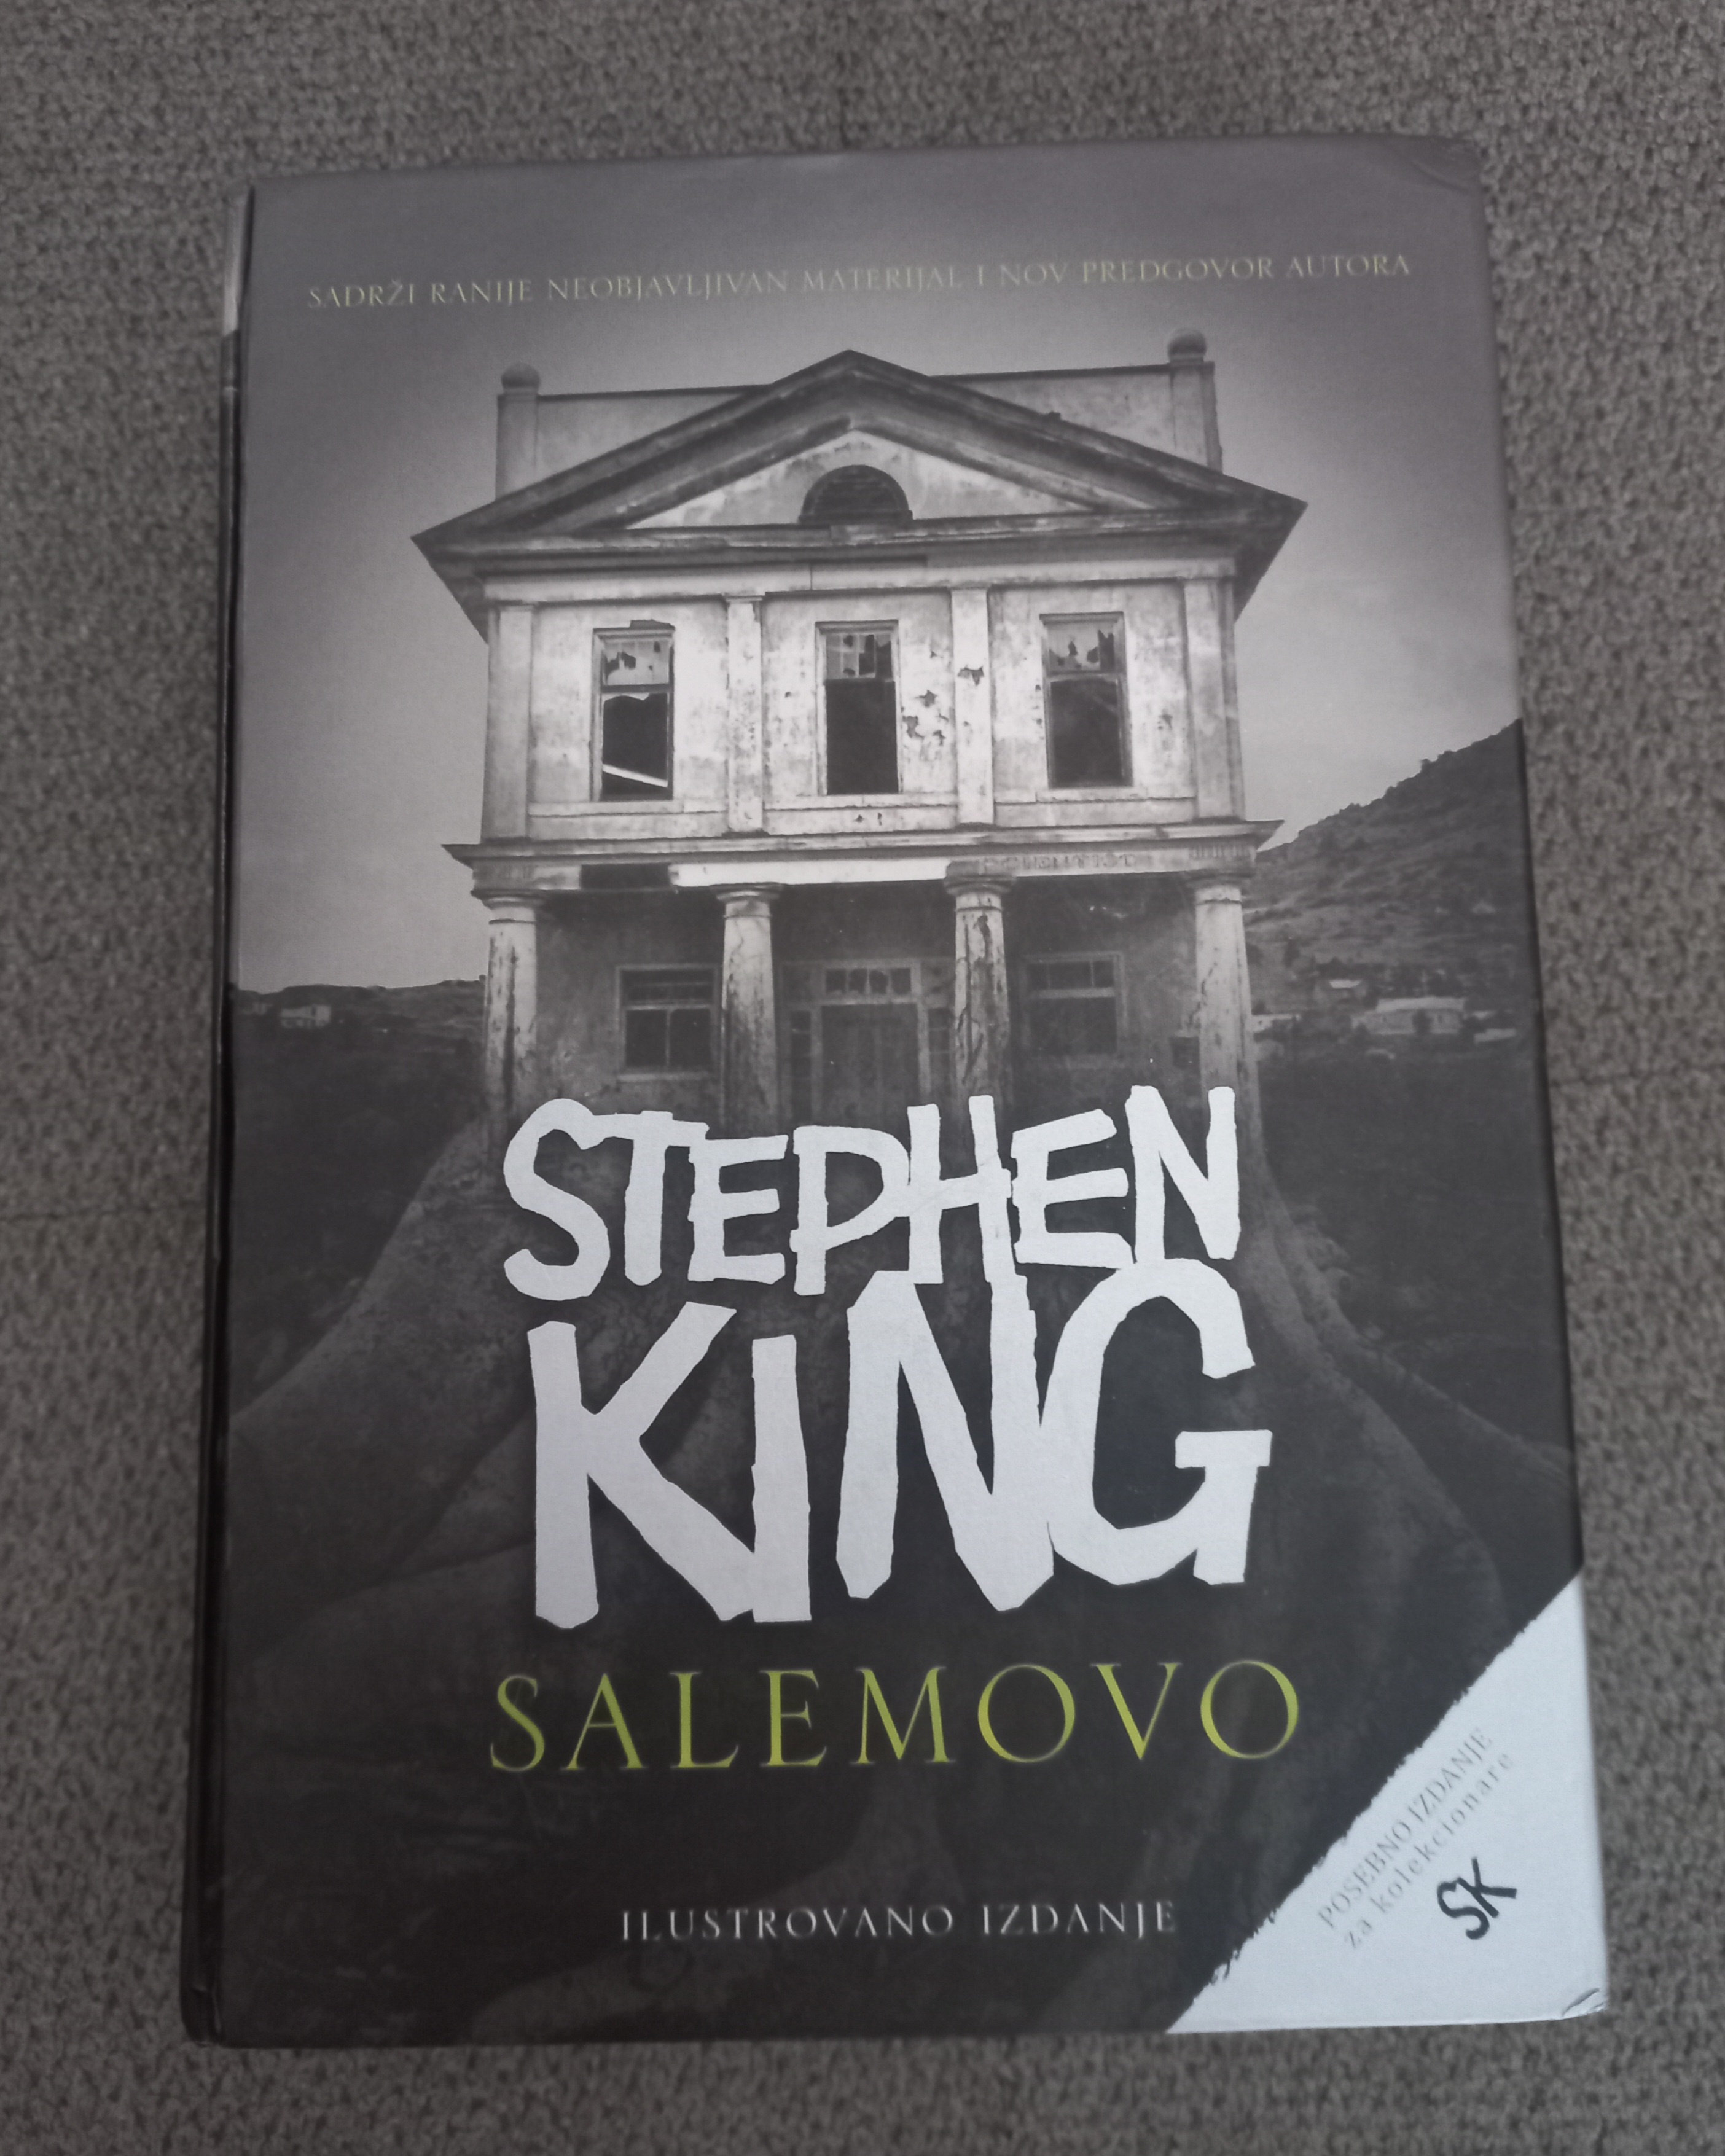 Salemovo- Stiven King (Stephen King)